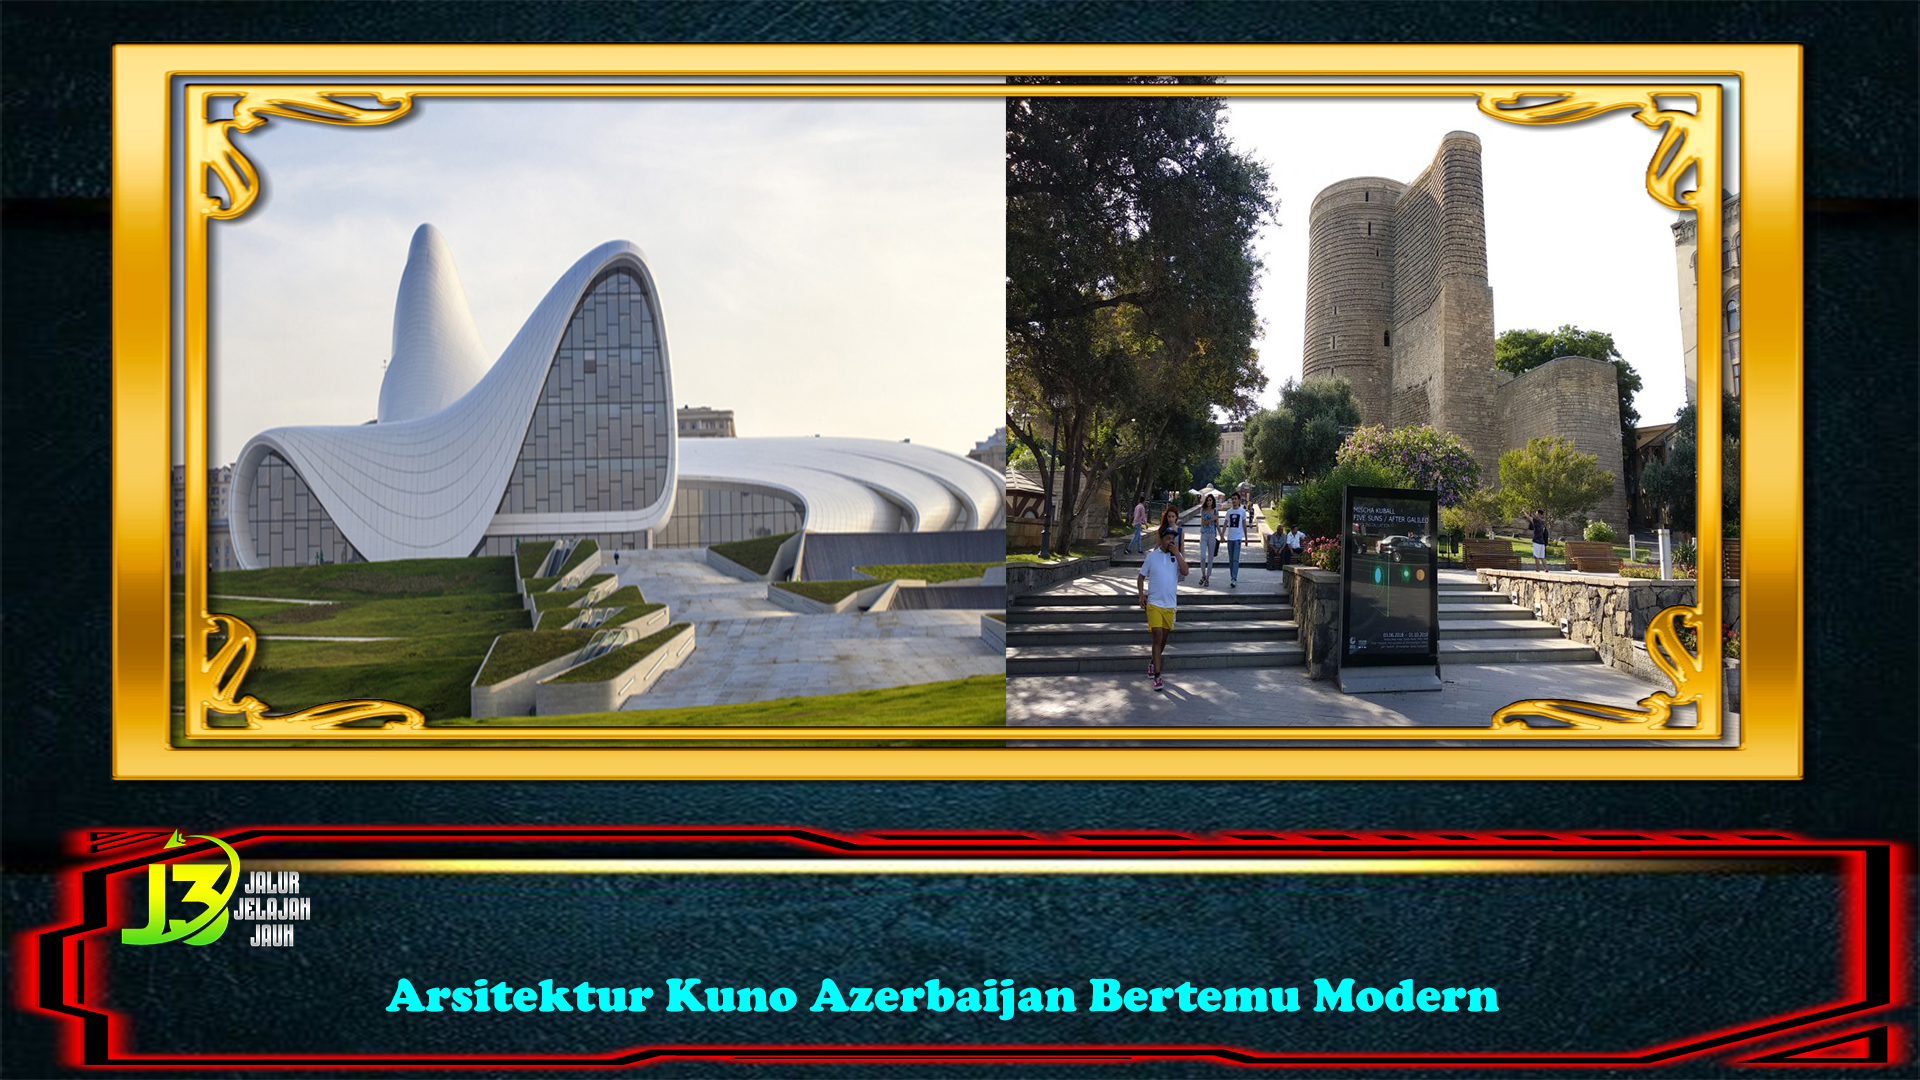 Arsitektur Kuno Azerbaijan Bertemu Modern